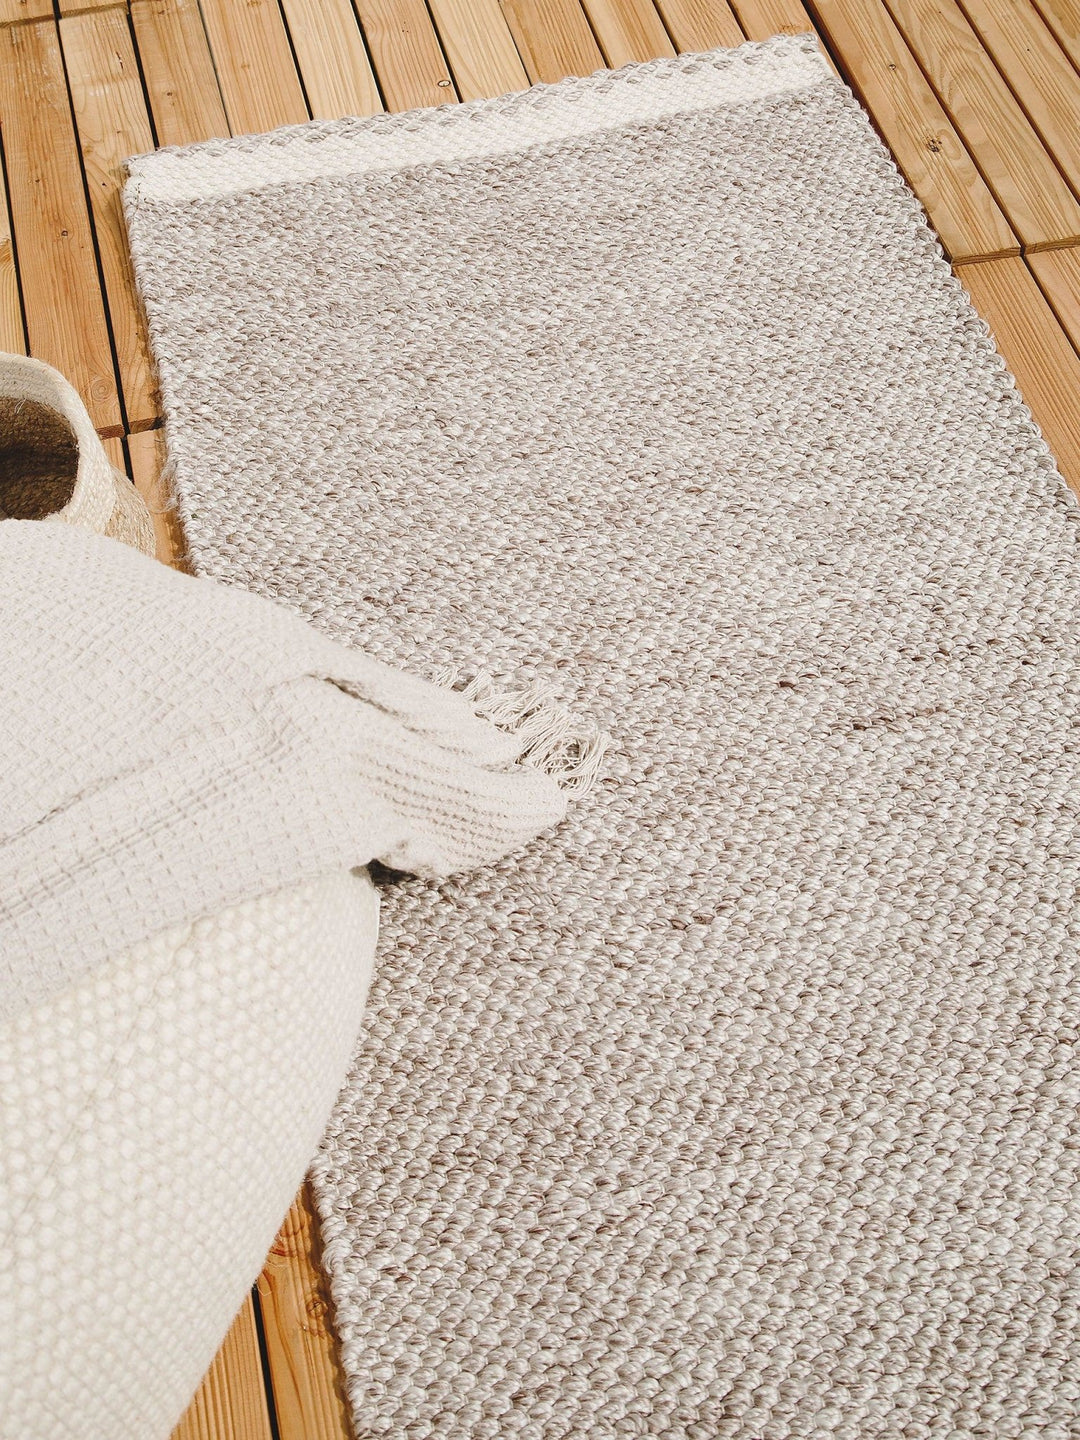 Teppich aus recyceltem Material Kiah Cream/Taupe - benuta PLUS - RugDreams®